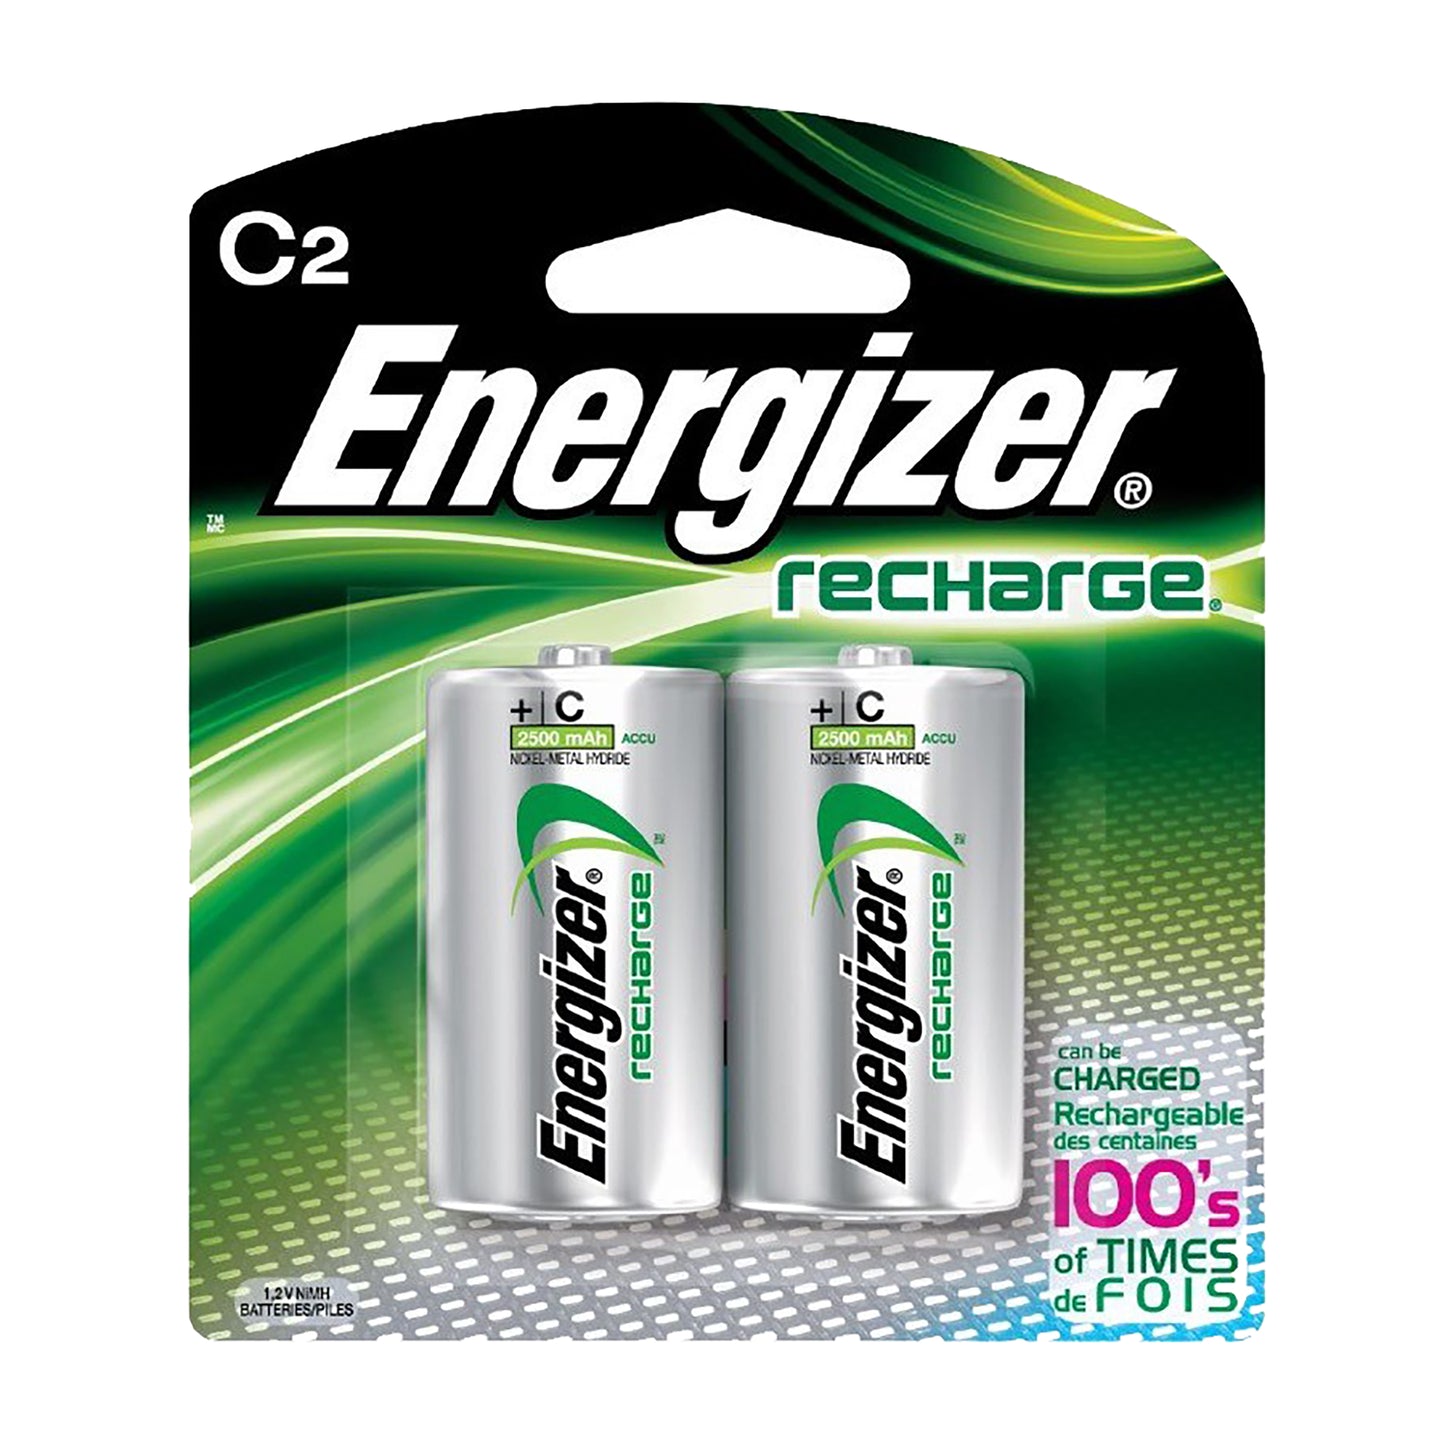 Energizer C NiIMH 2500mah Rechargeable Battery